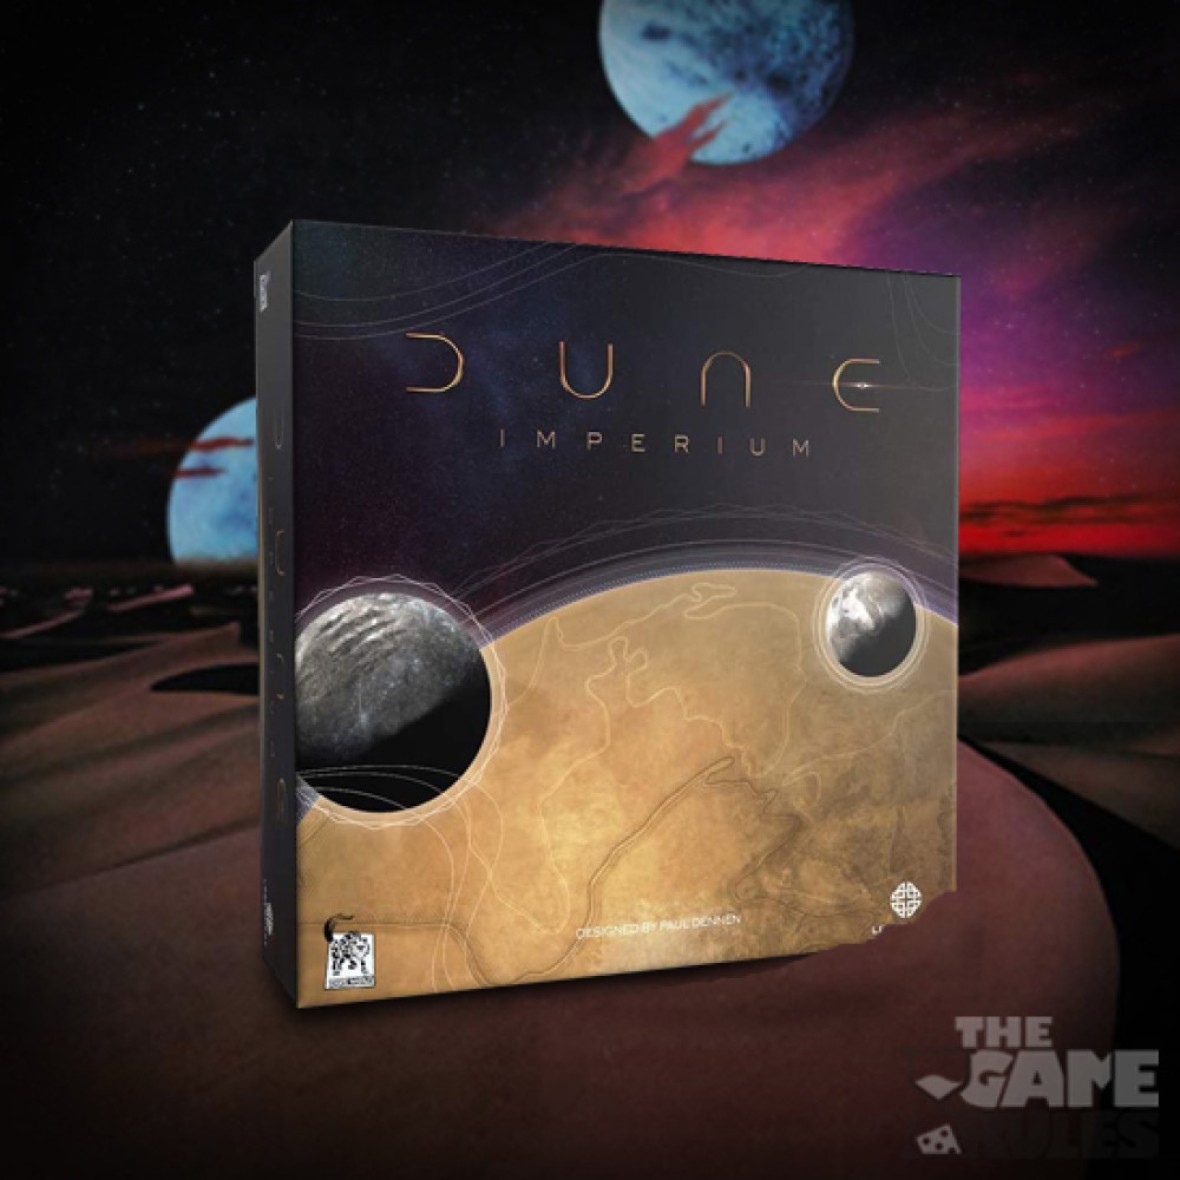 Dune Imperium: όταν η στρατηγική συναντά την επιστημονική φαντασία!